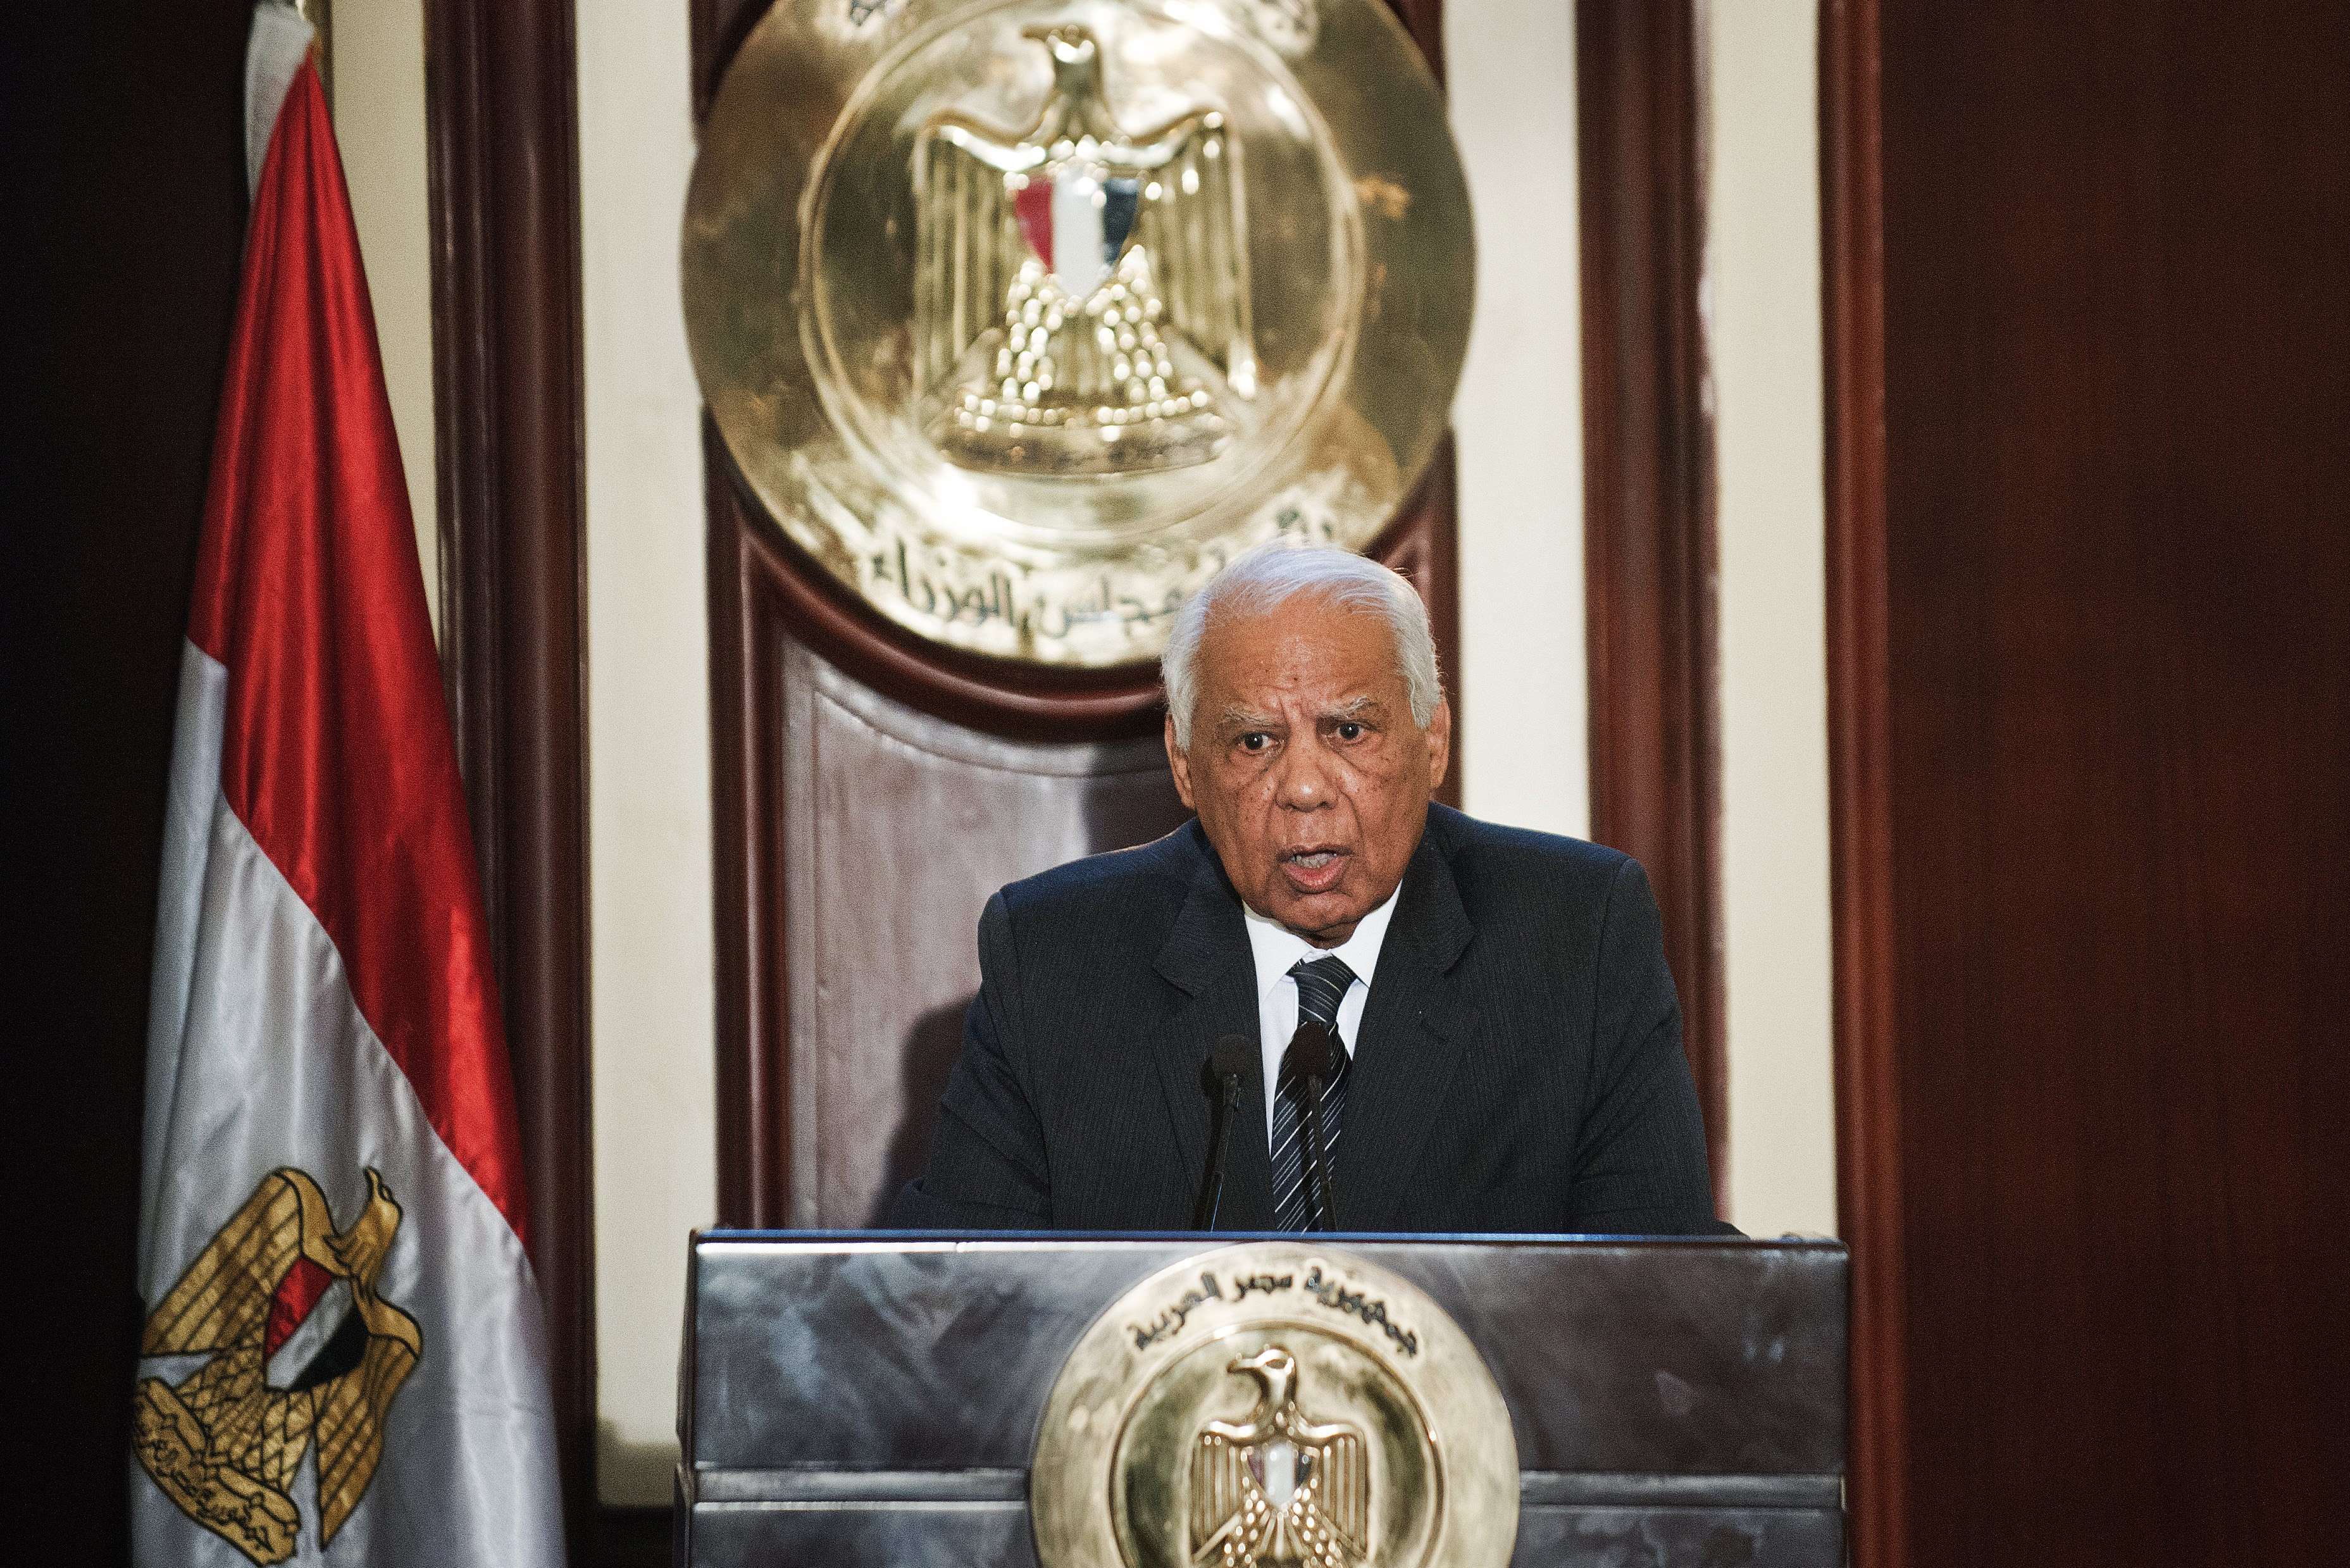 EGYPT-POLITICS-UNREST